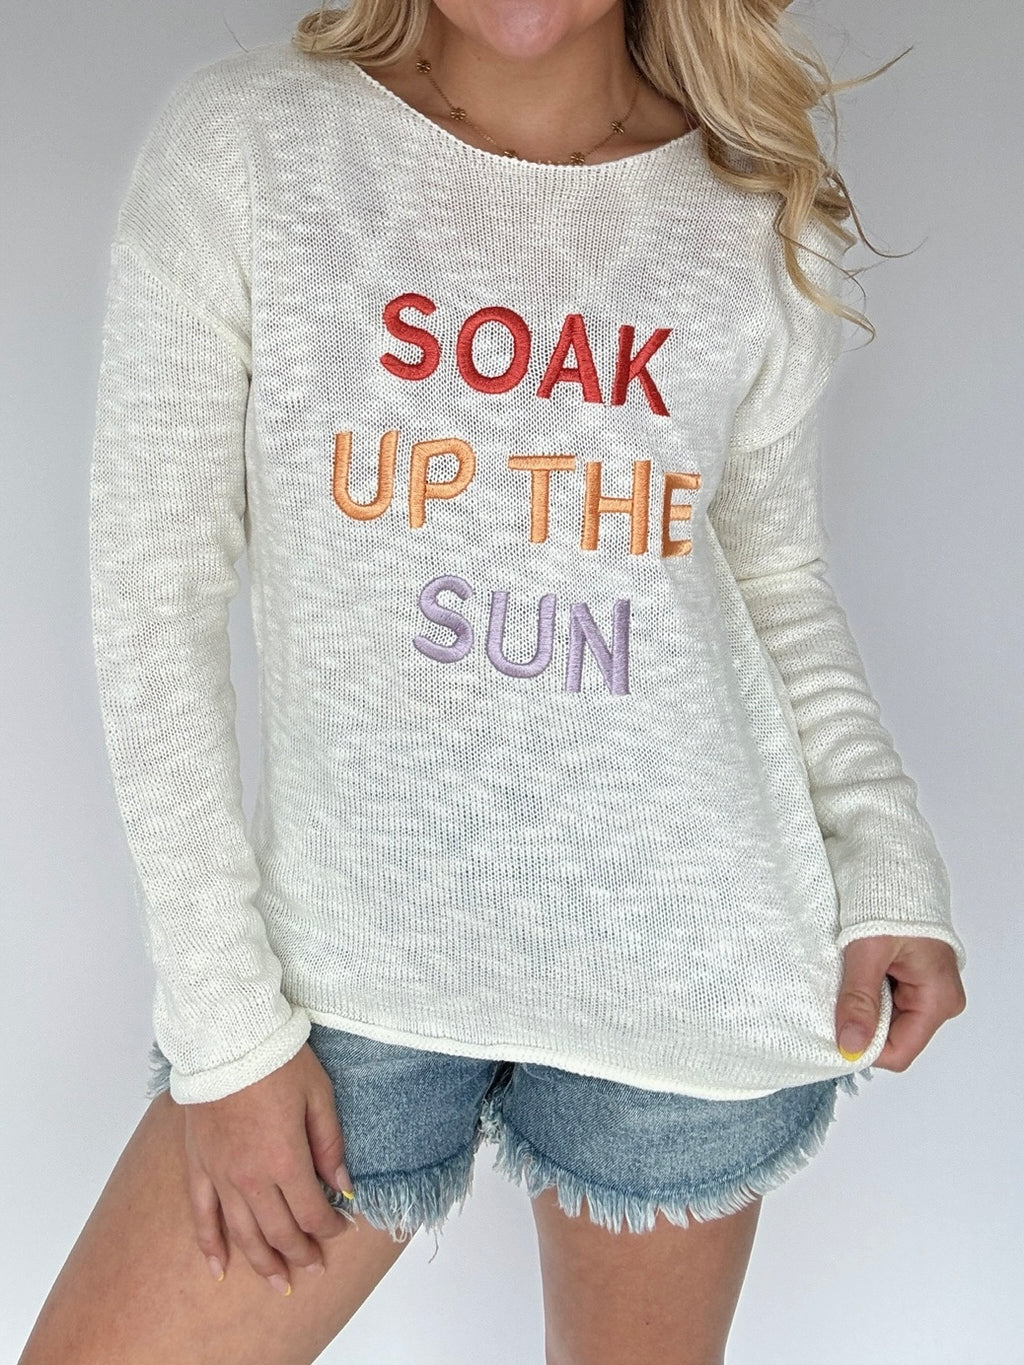 Soak Up The Sun Knit Top